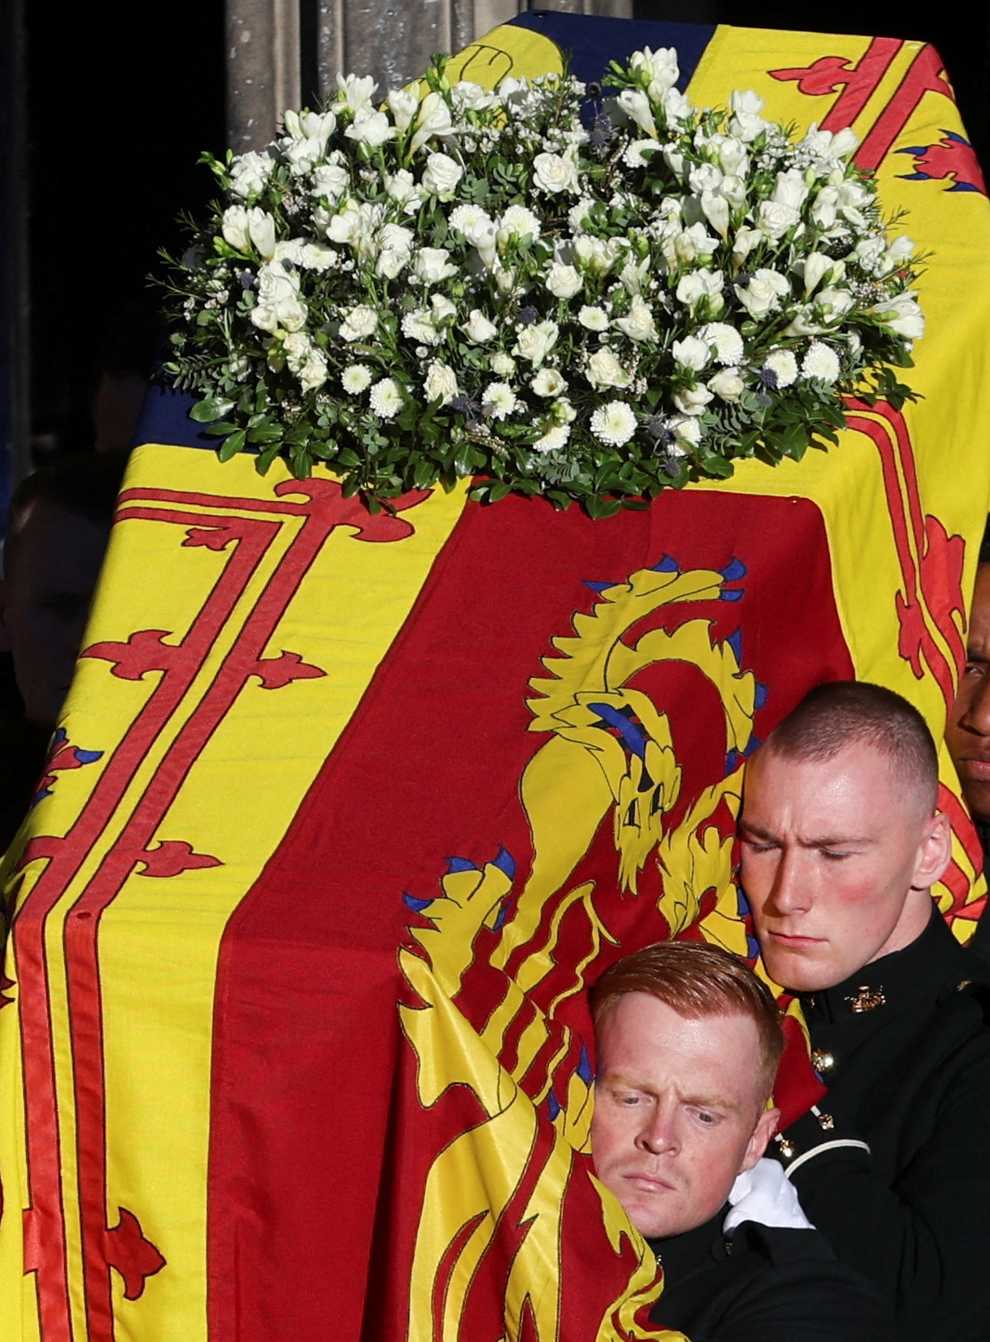 The Queen’s coffin was lying in state in Edinburgh last week (Russell Cheyne/PA)